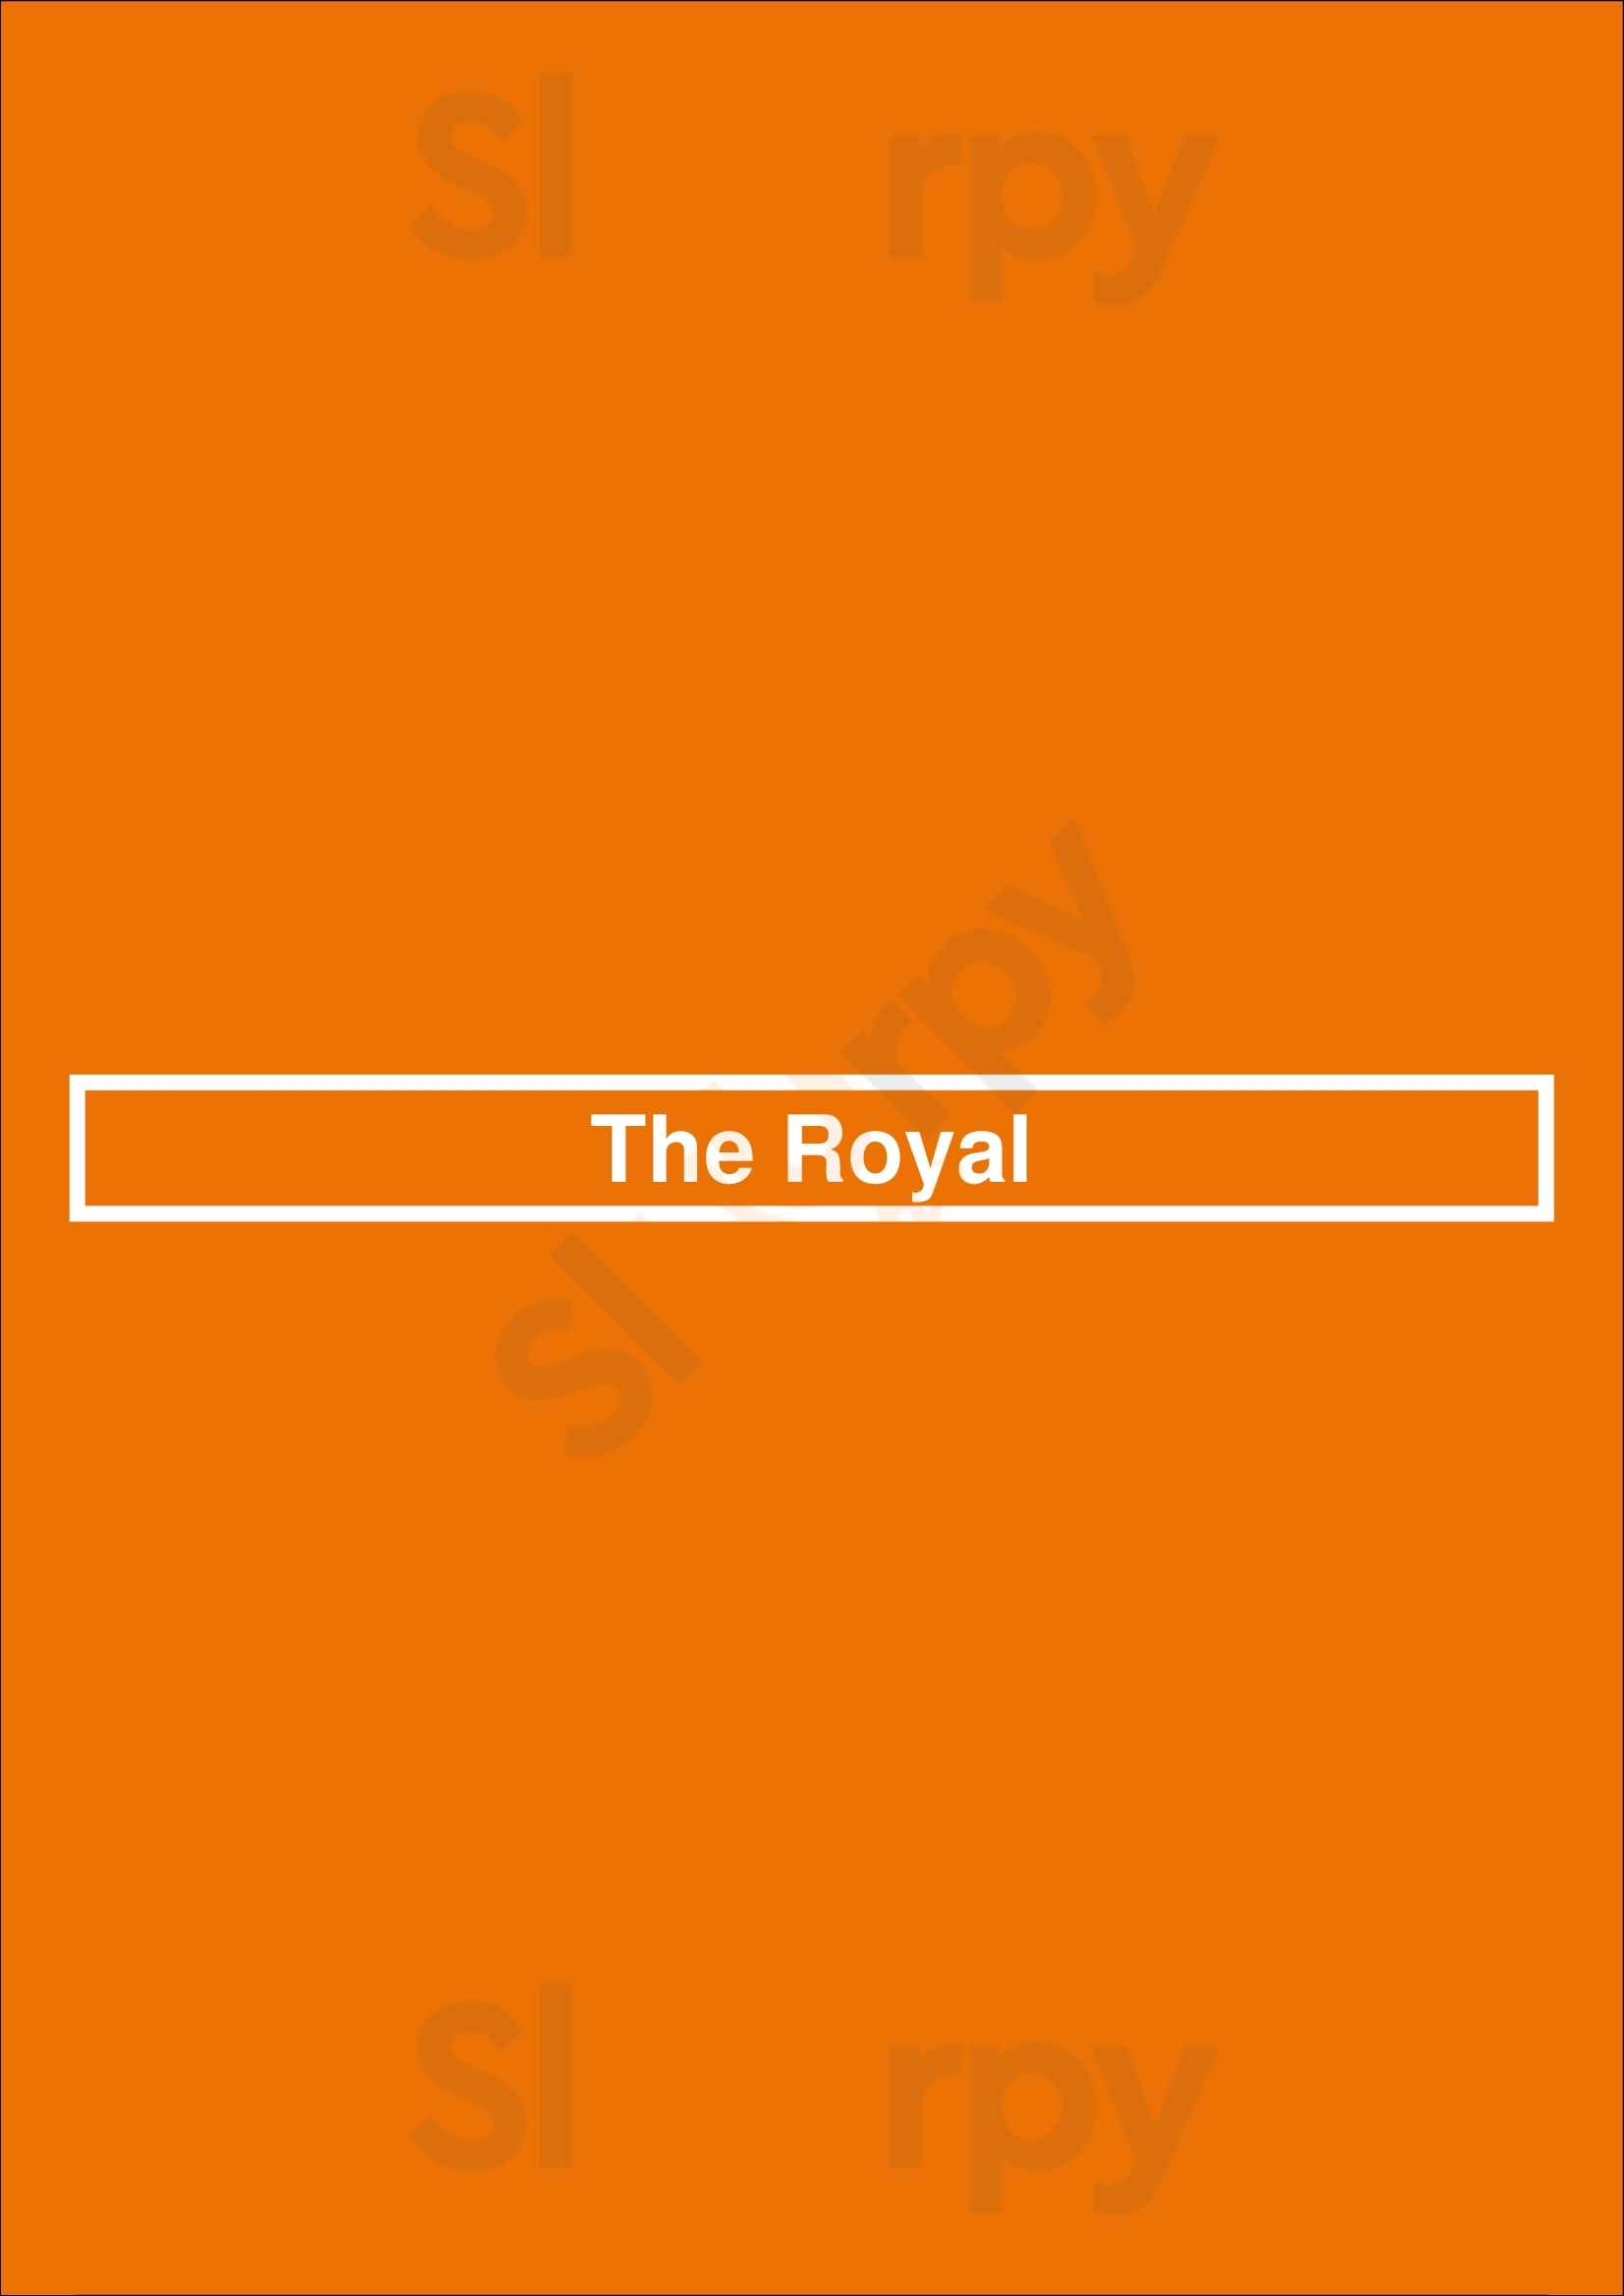 The Royal Perth Menu - 1